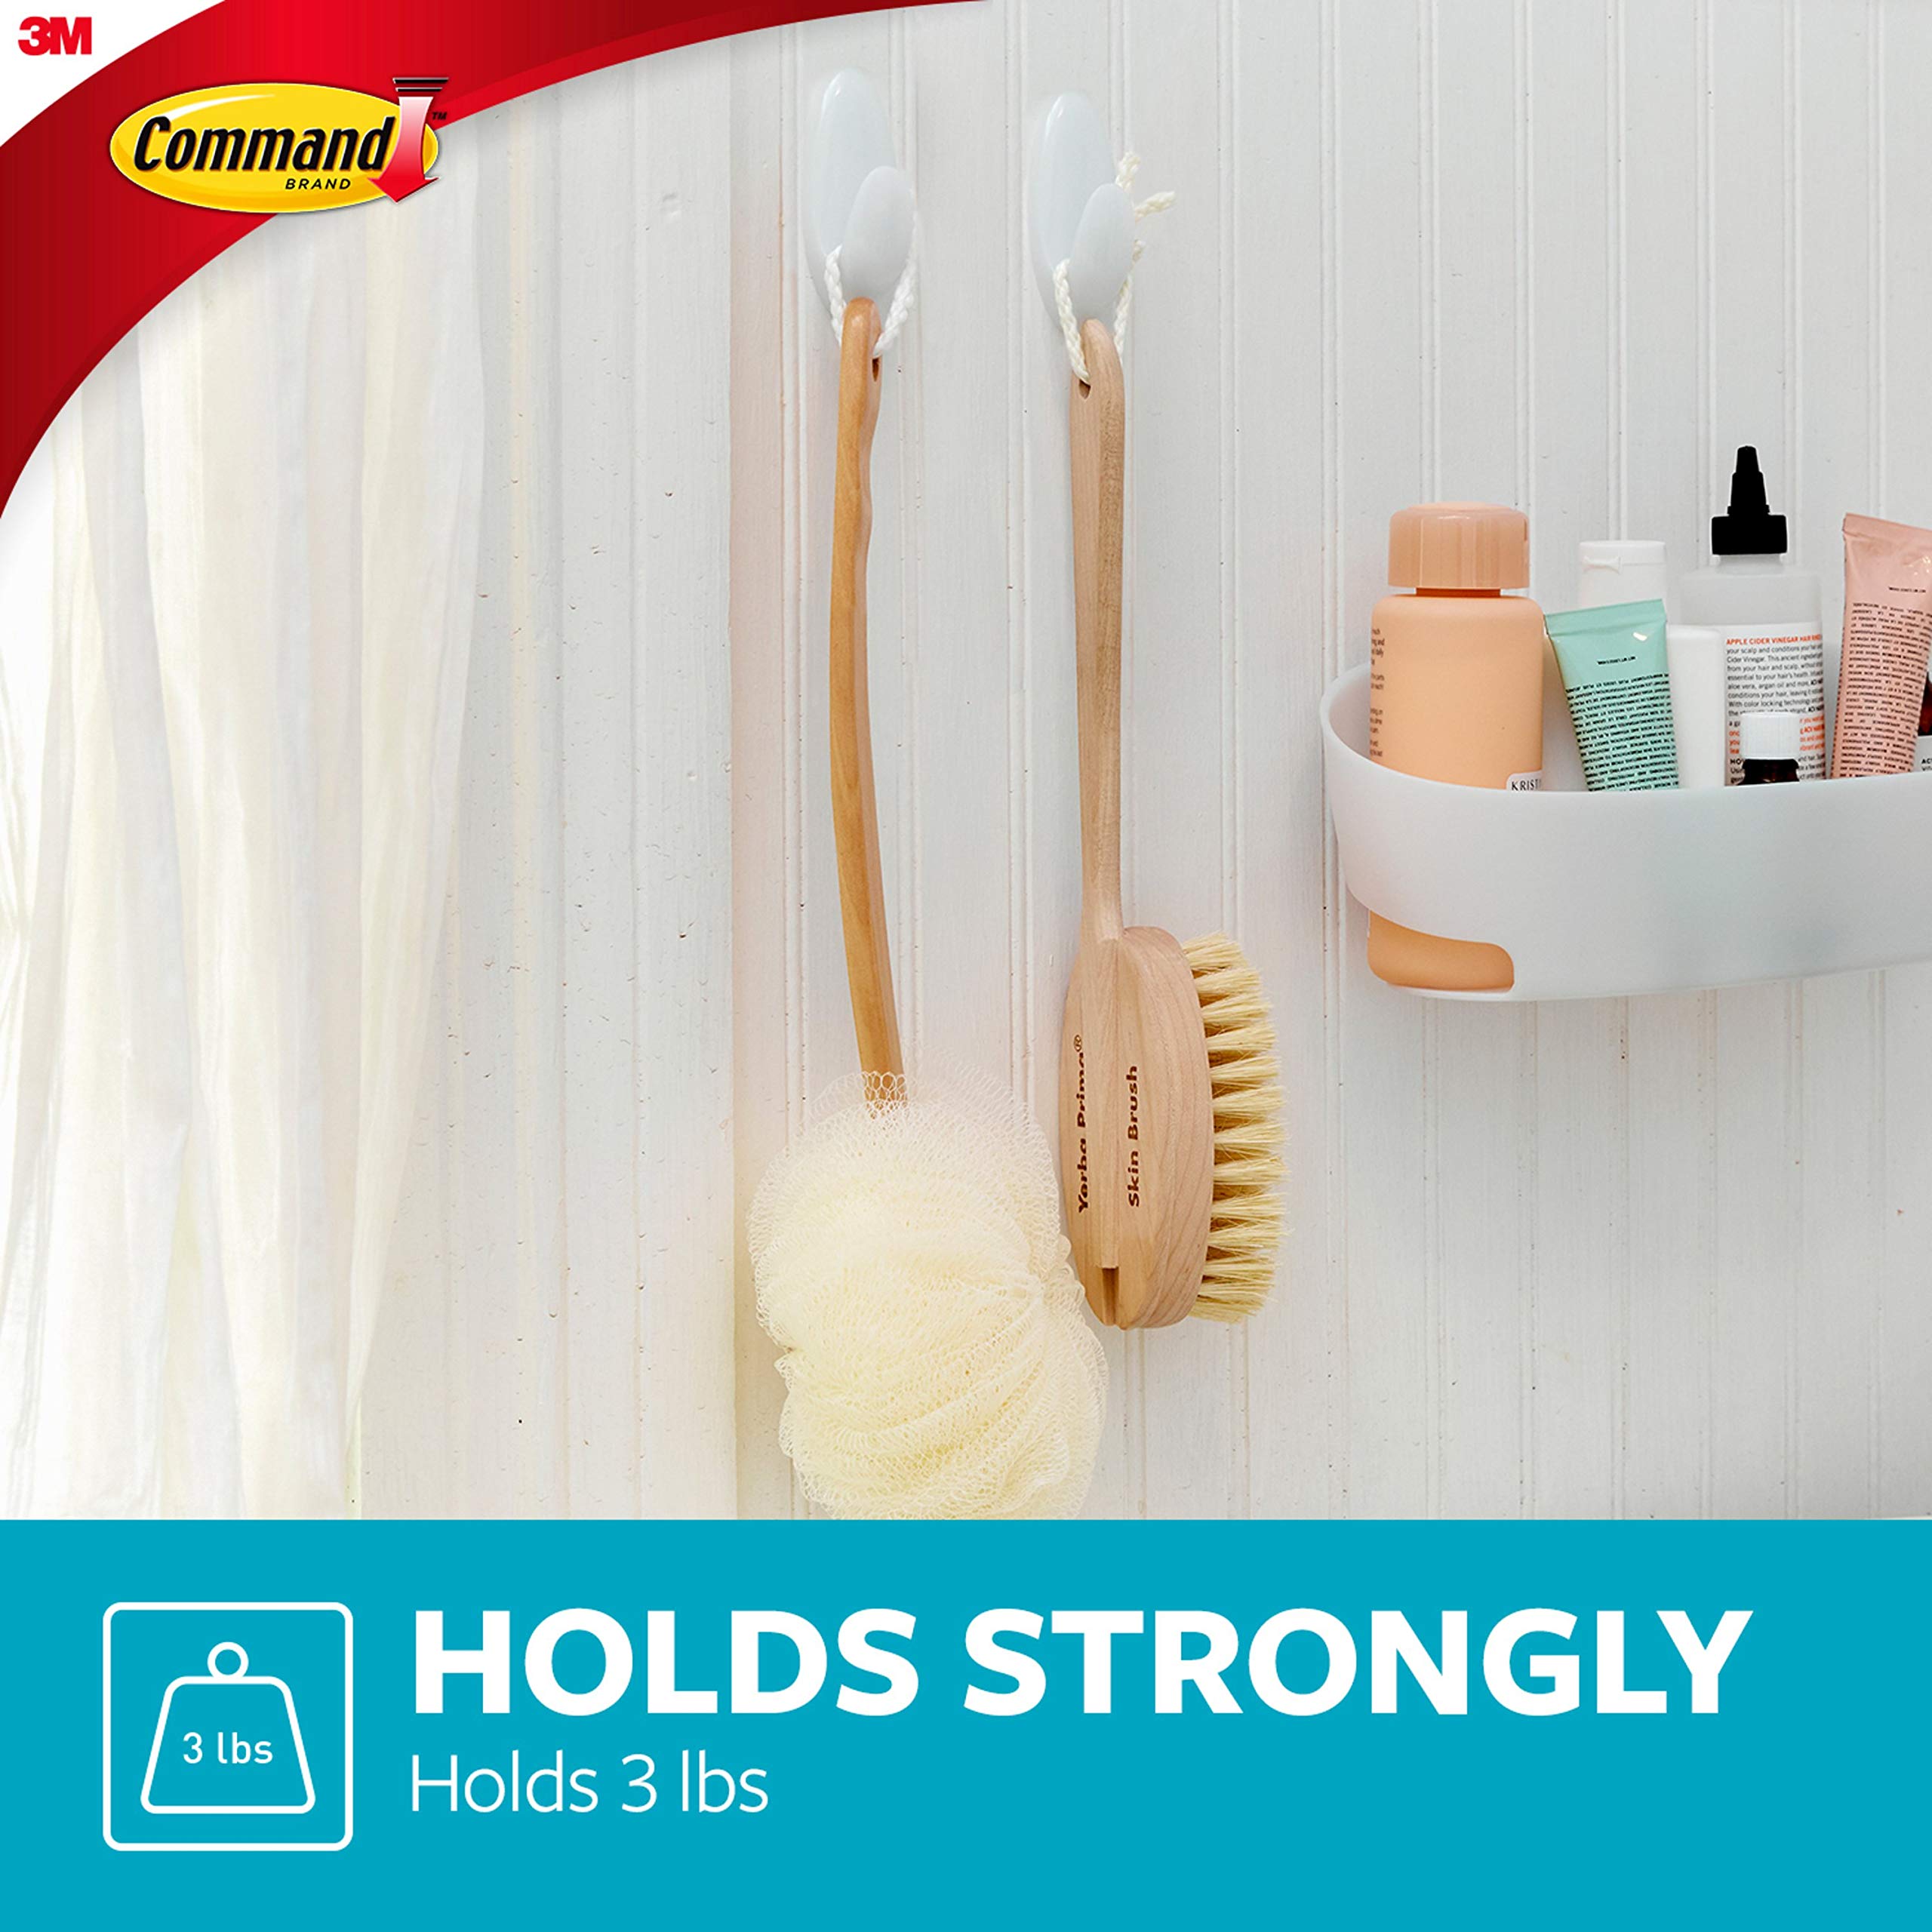 Command Bath Medium Hooks, 3 lb Capacity, 2-Hooks, 2-Strips, Organize Damage-Free